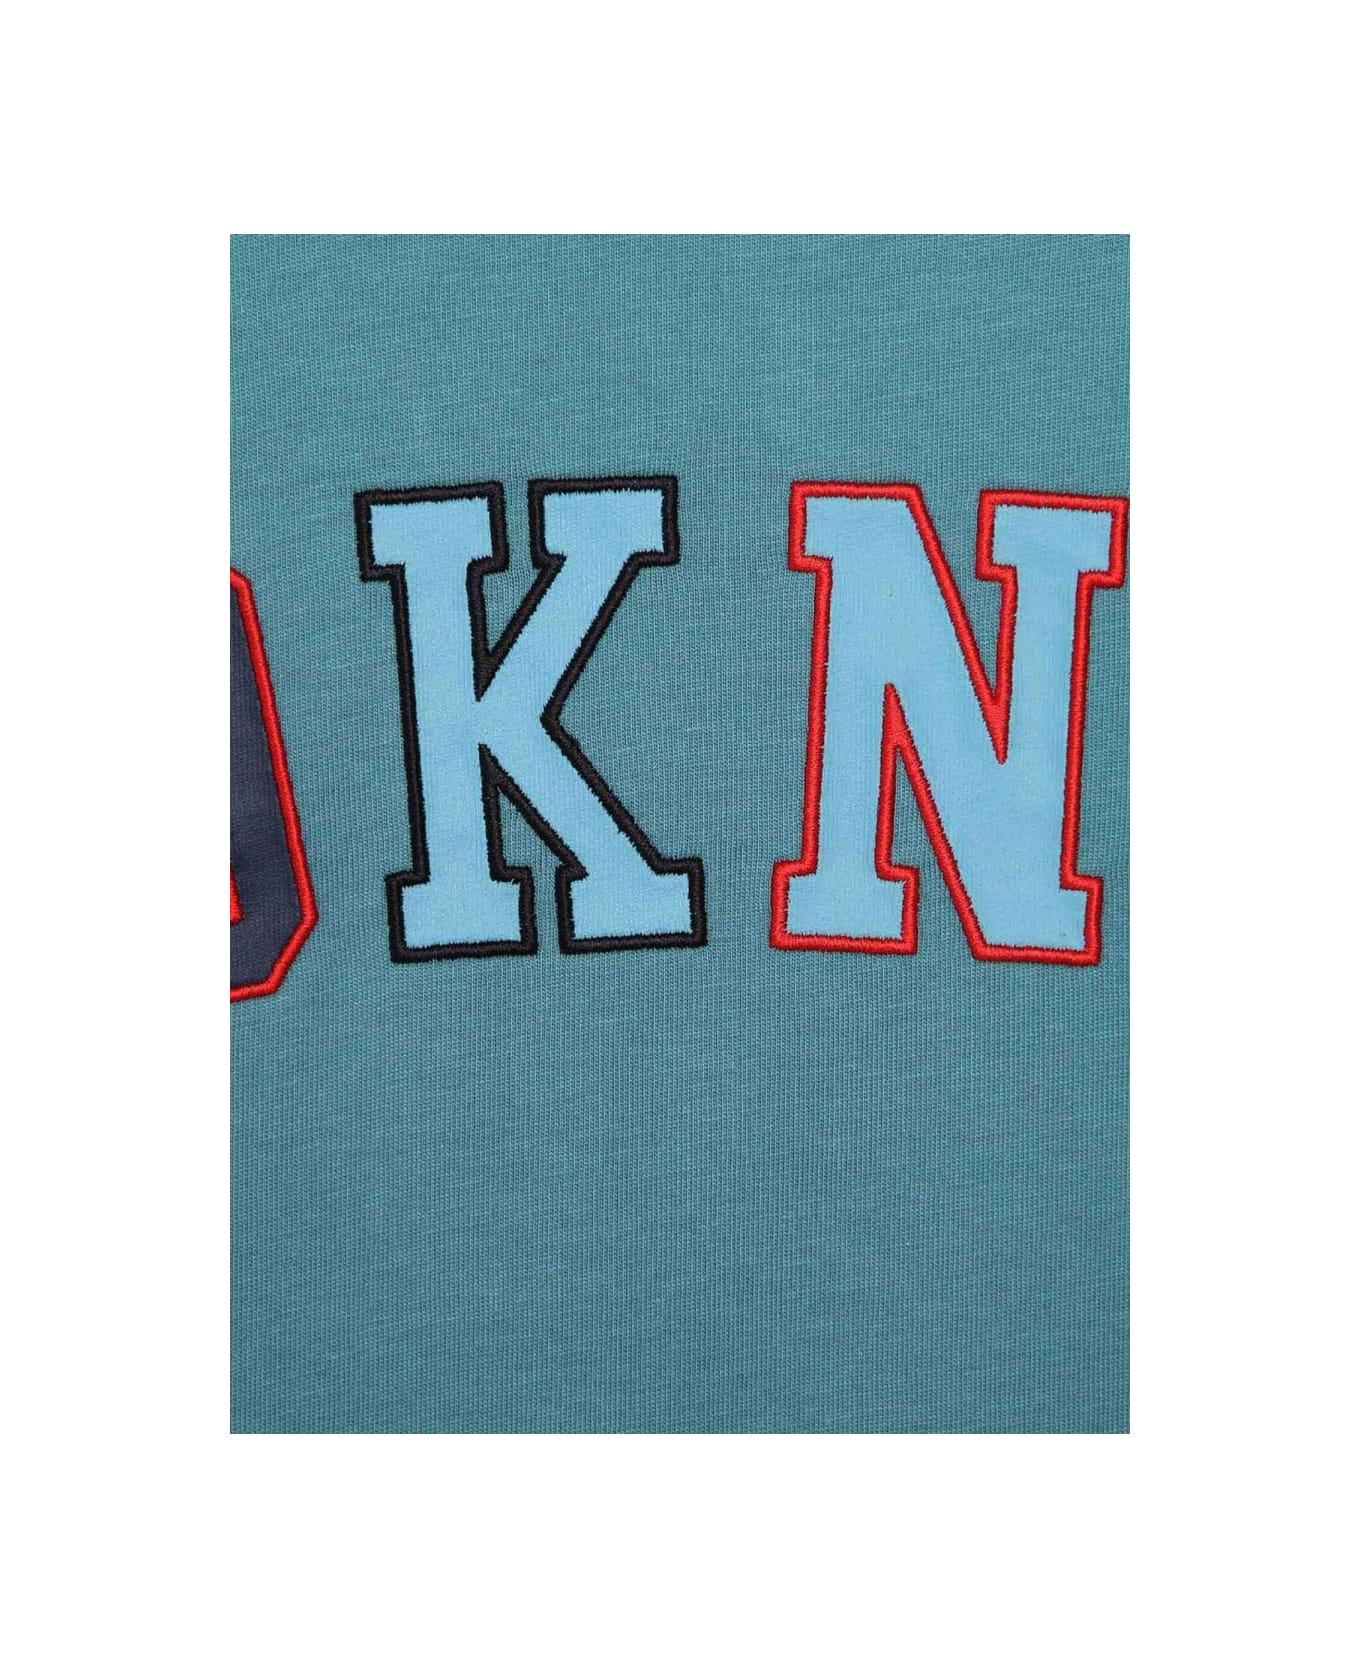 DKNY Mc Logo Stripe T-shirt - AZURE